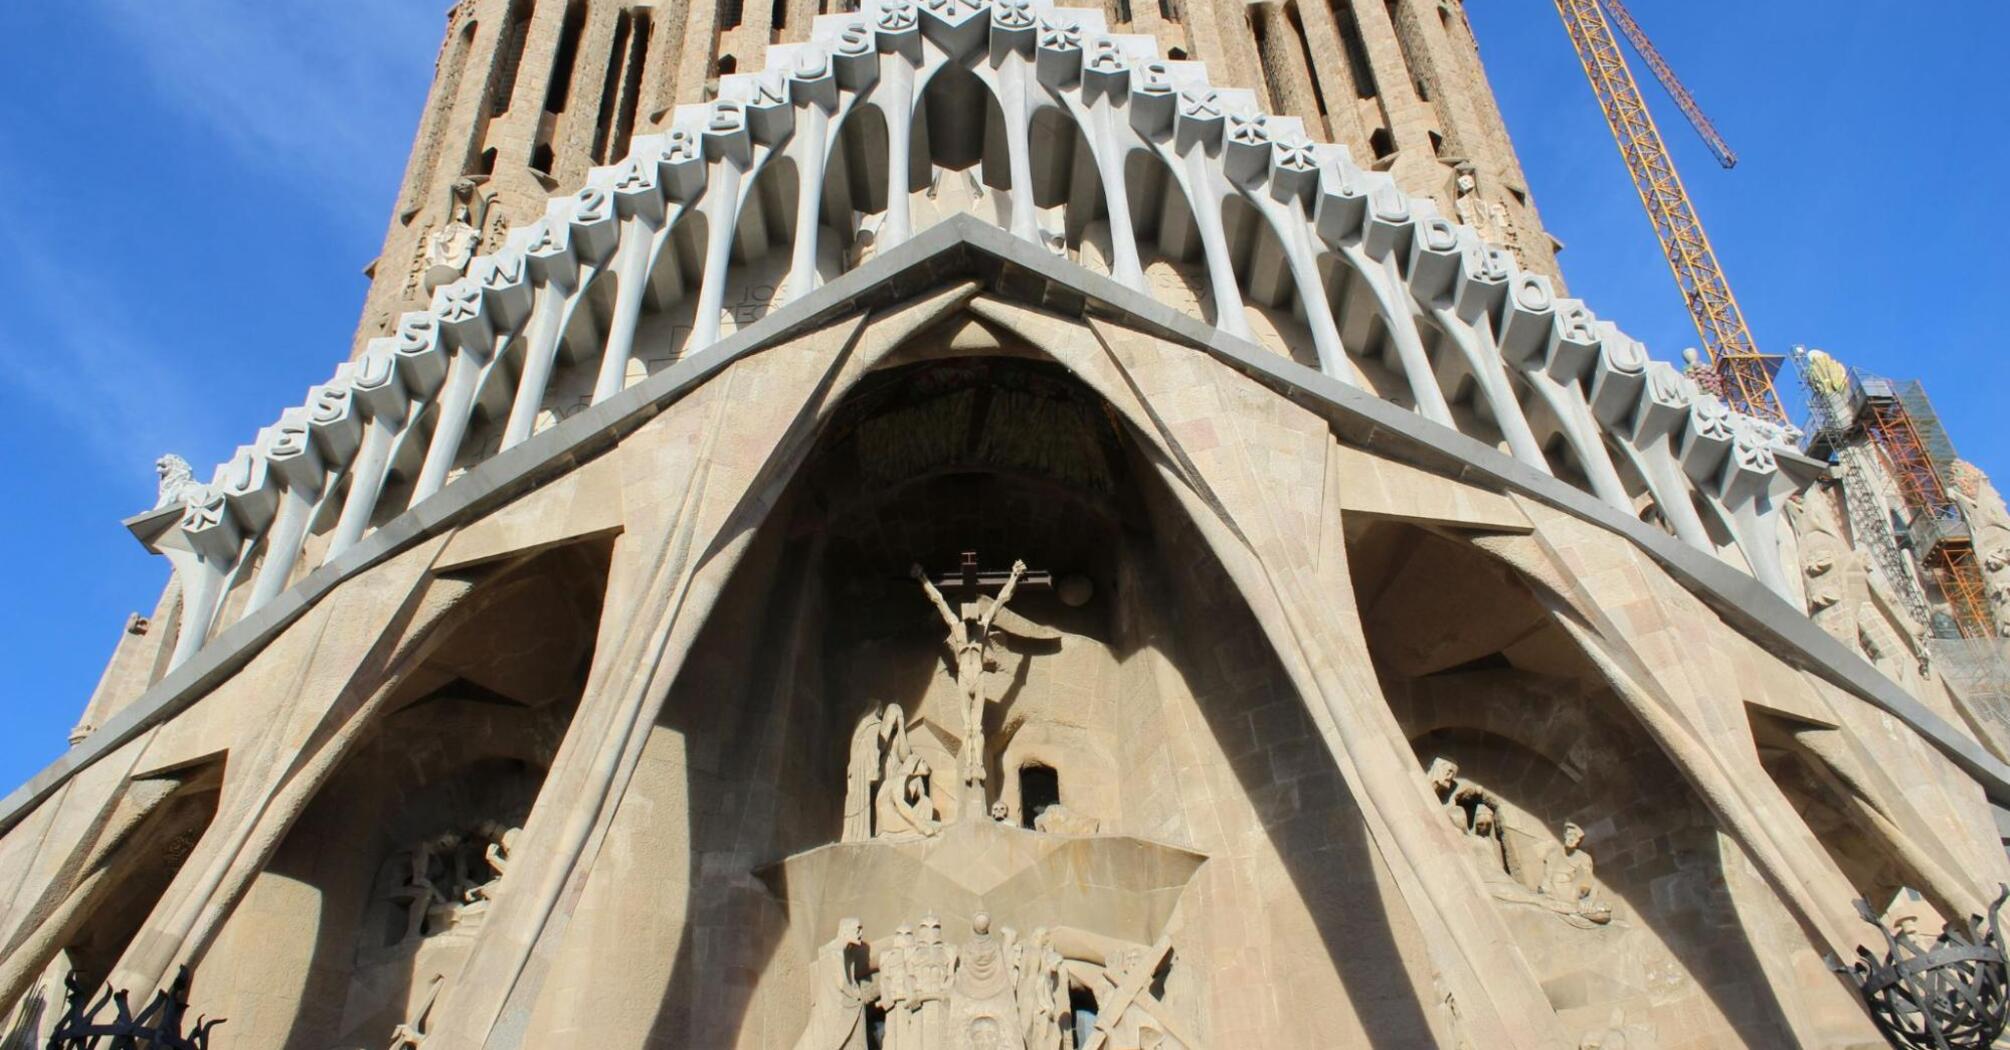 The Sagrada Familia, Barcelona, Spain is still in construction